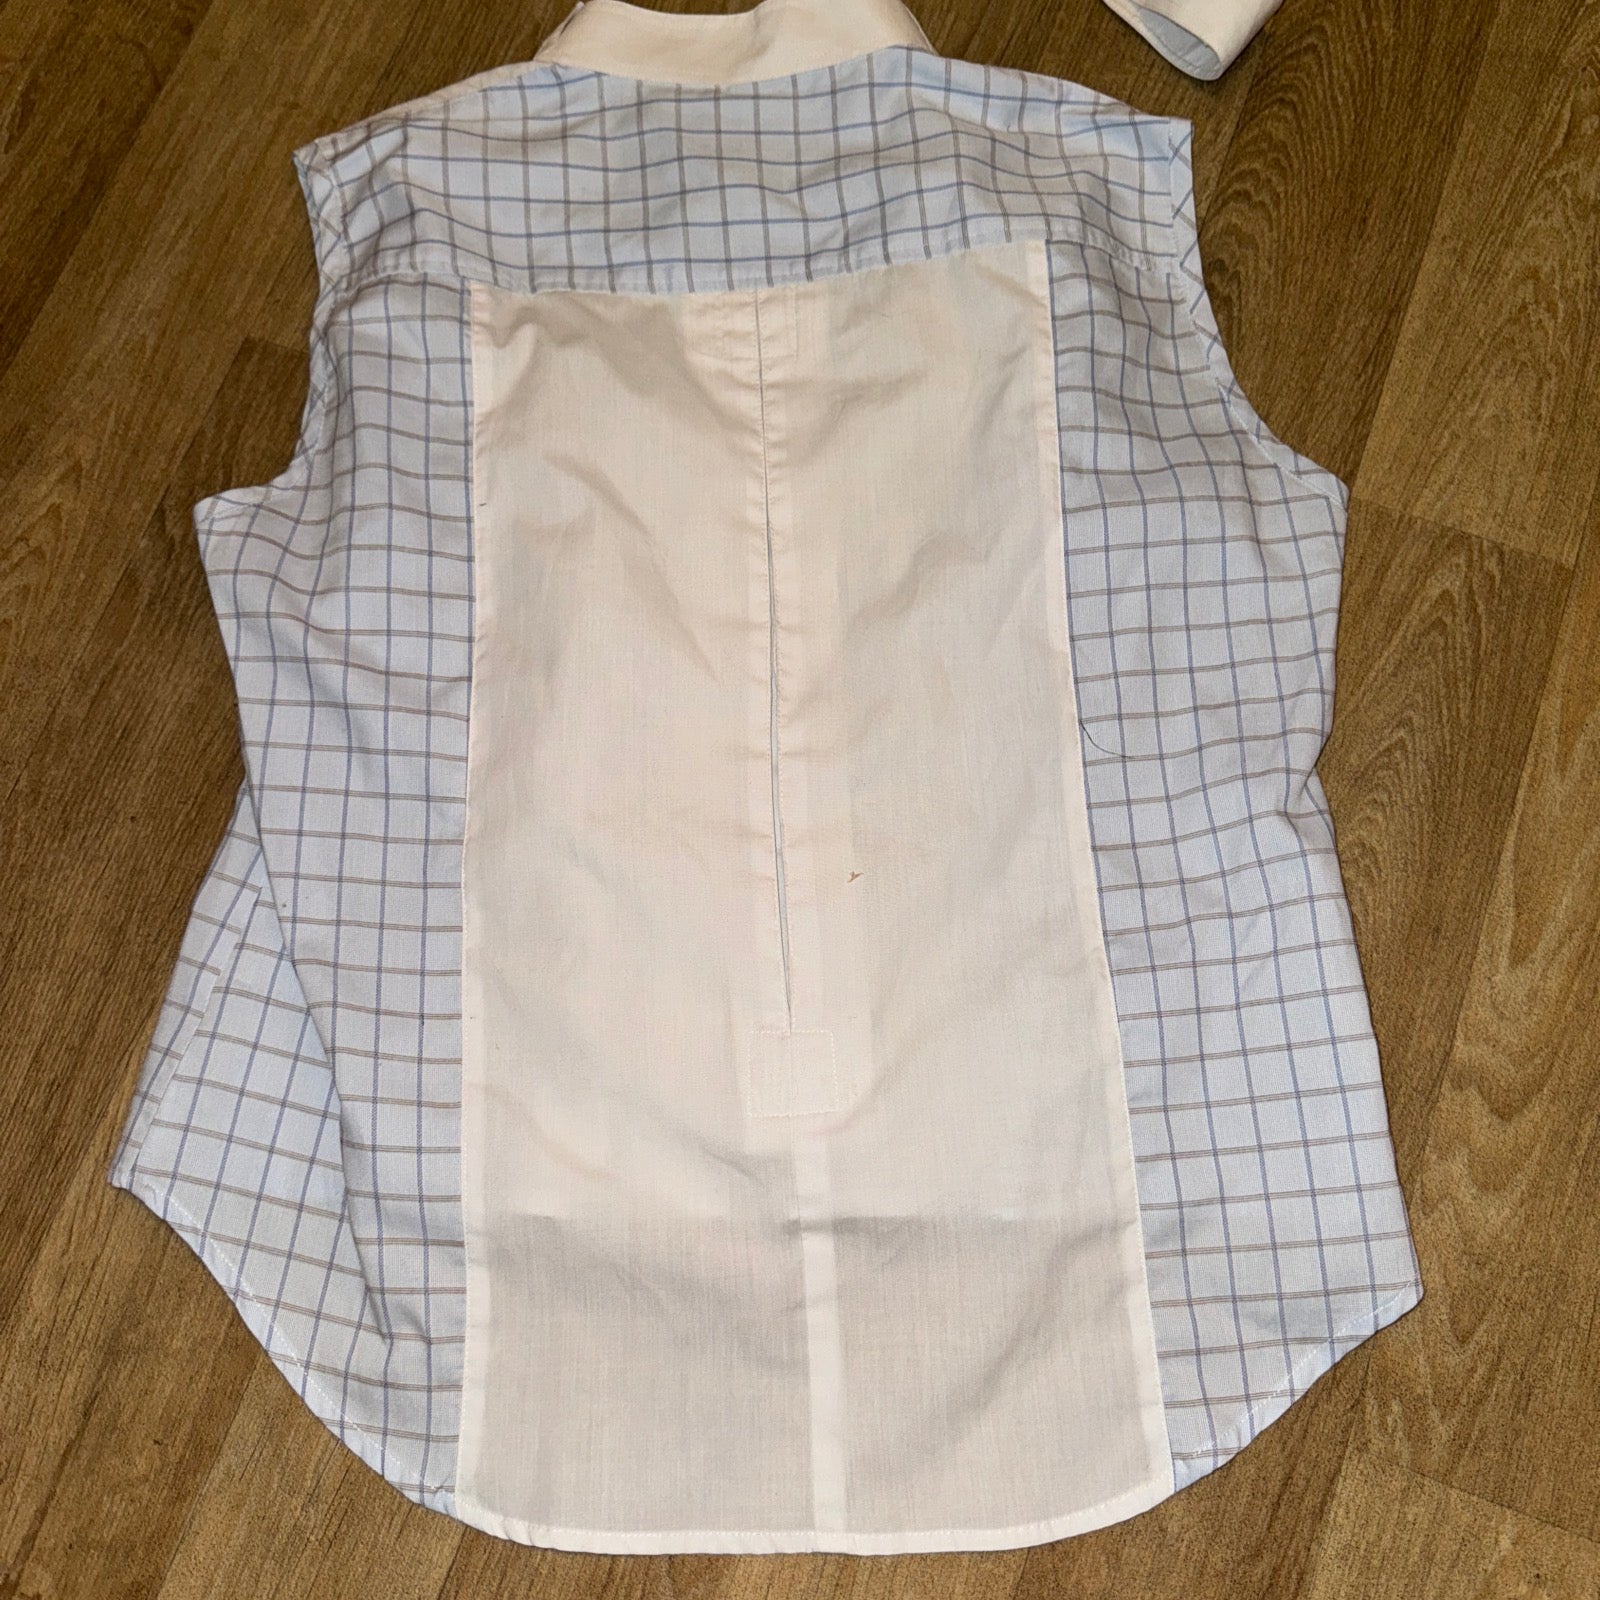 Dublin Stock Show Sleeveless Shirt - Size 18 42”